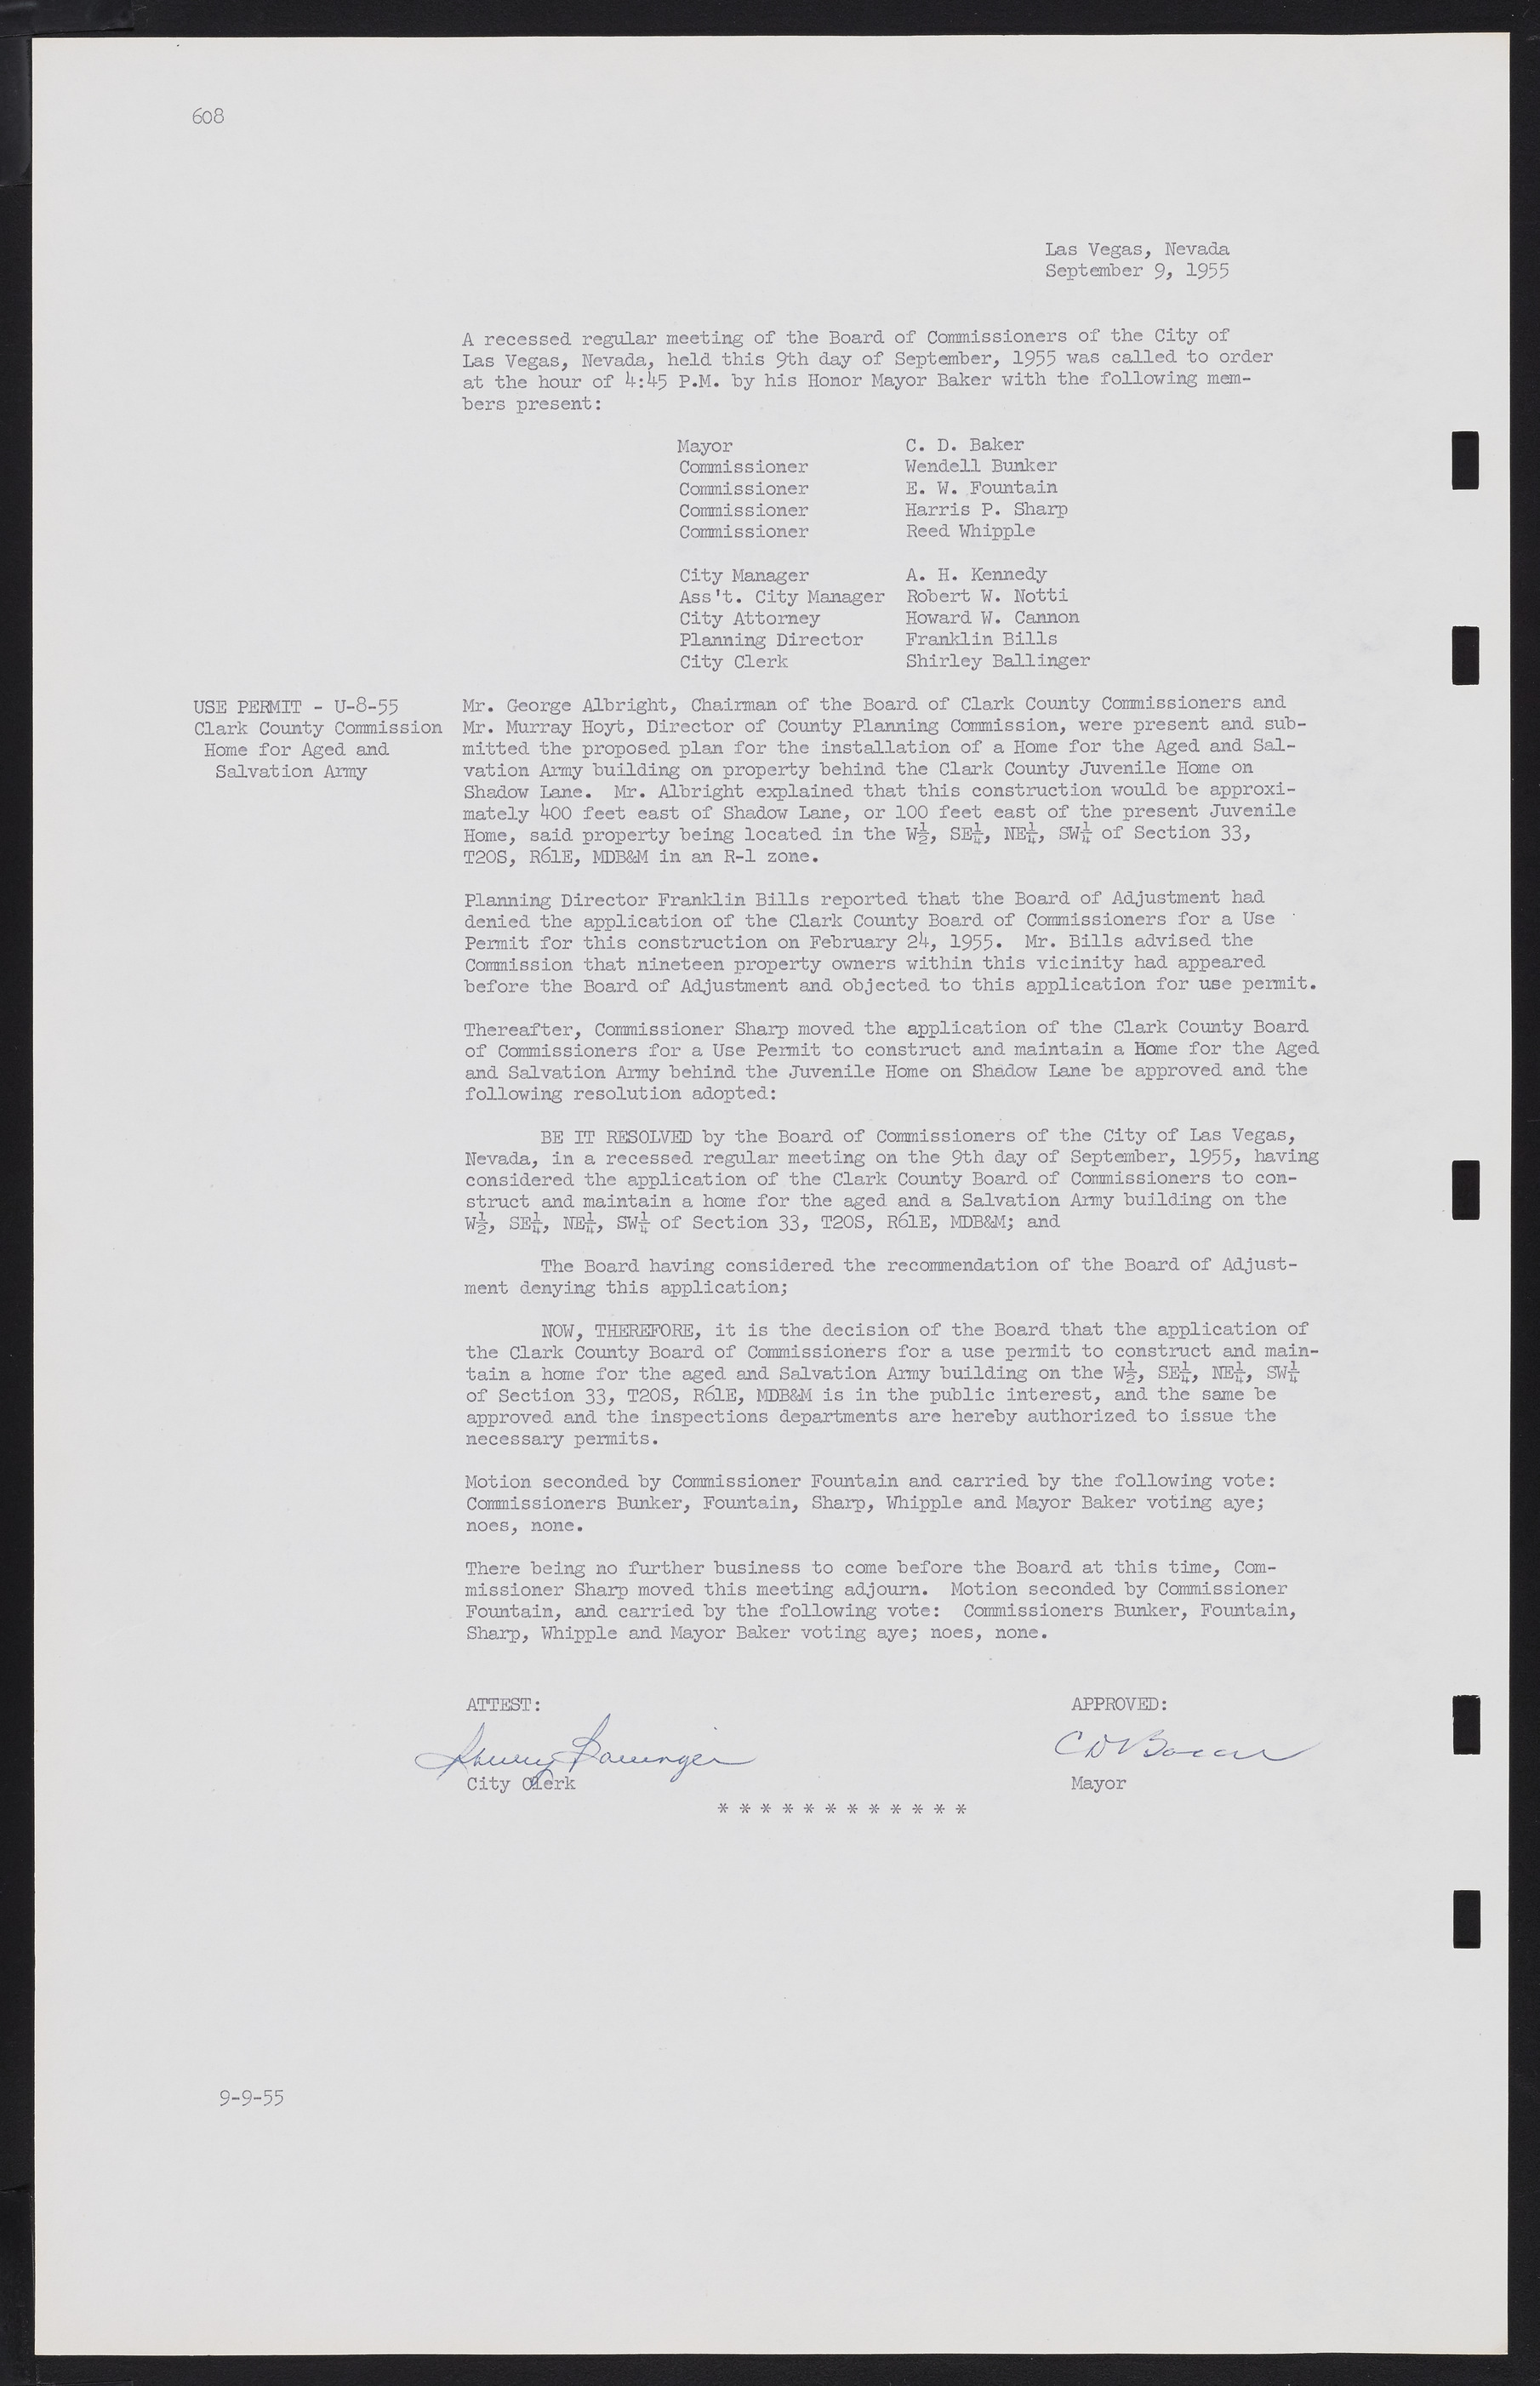 Las Vegas City Commission Minutes, February 17, 1954 to September 21, 1955, lvc000009-614